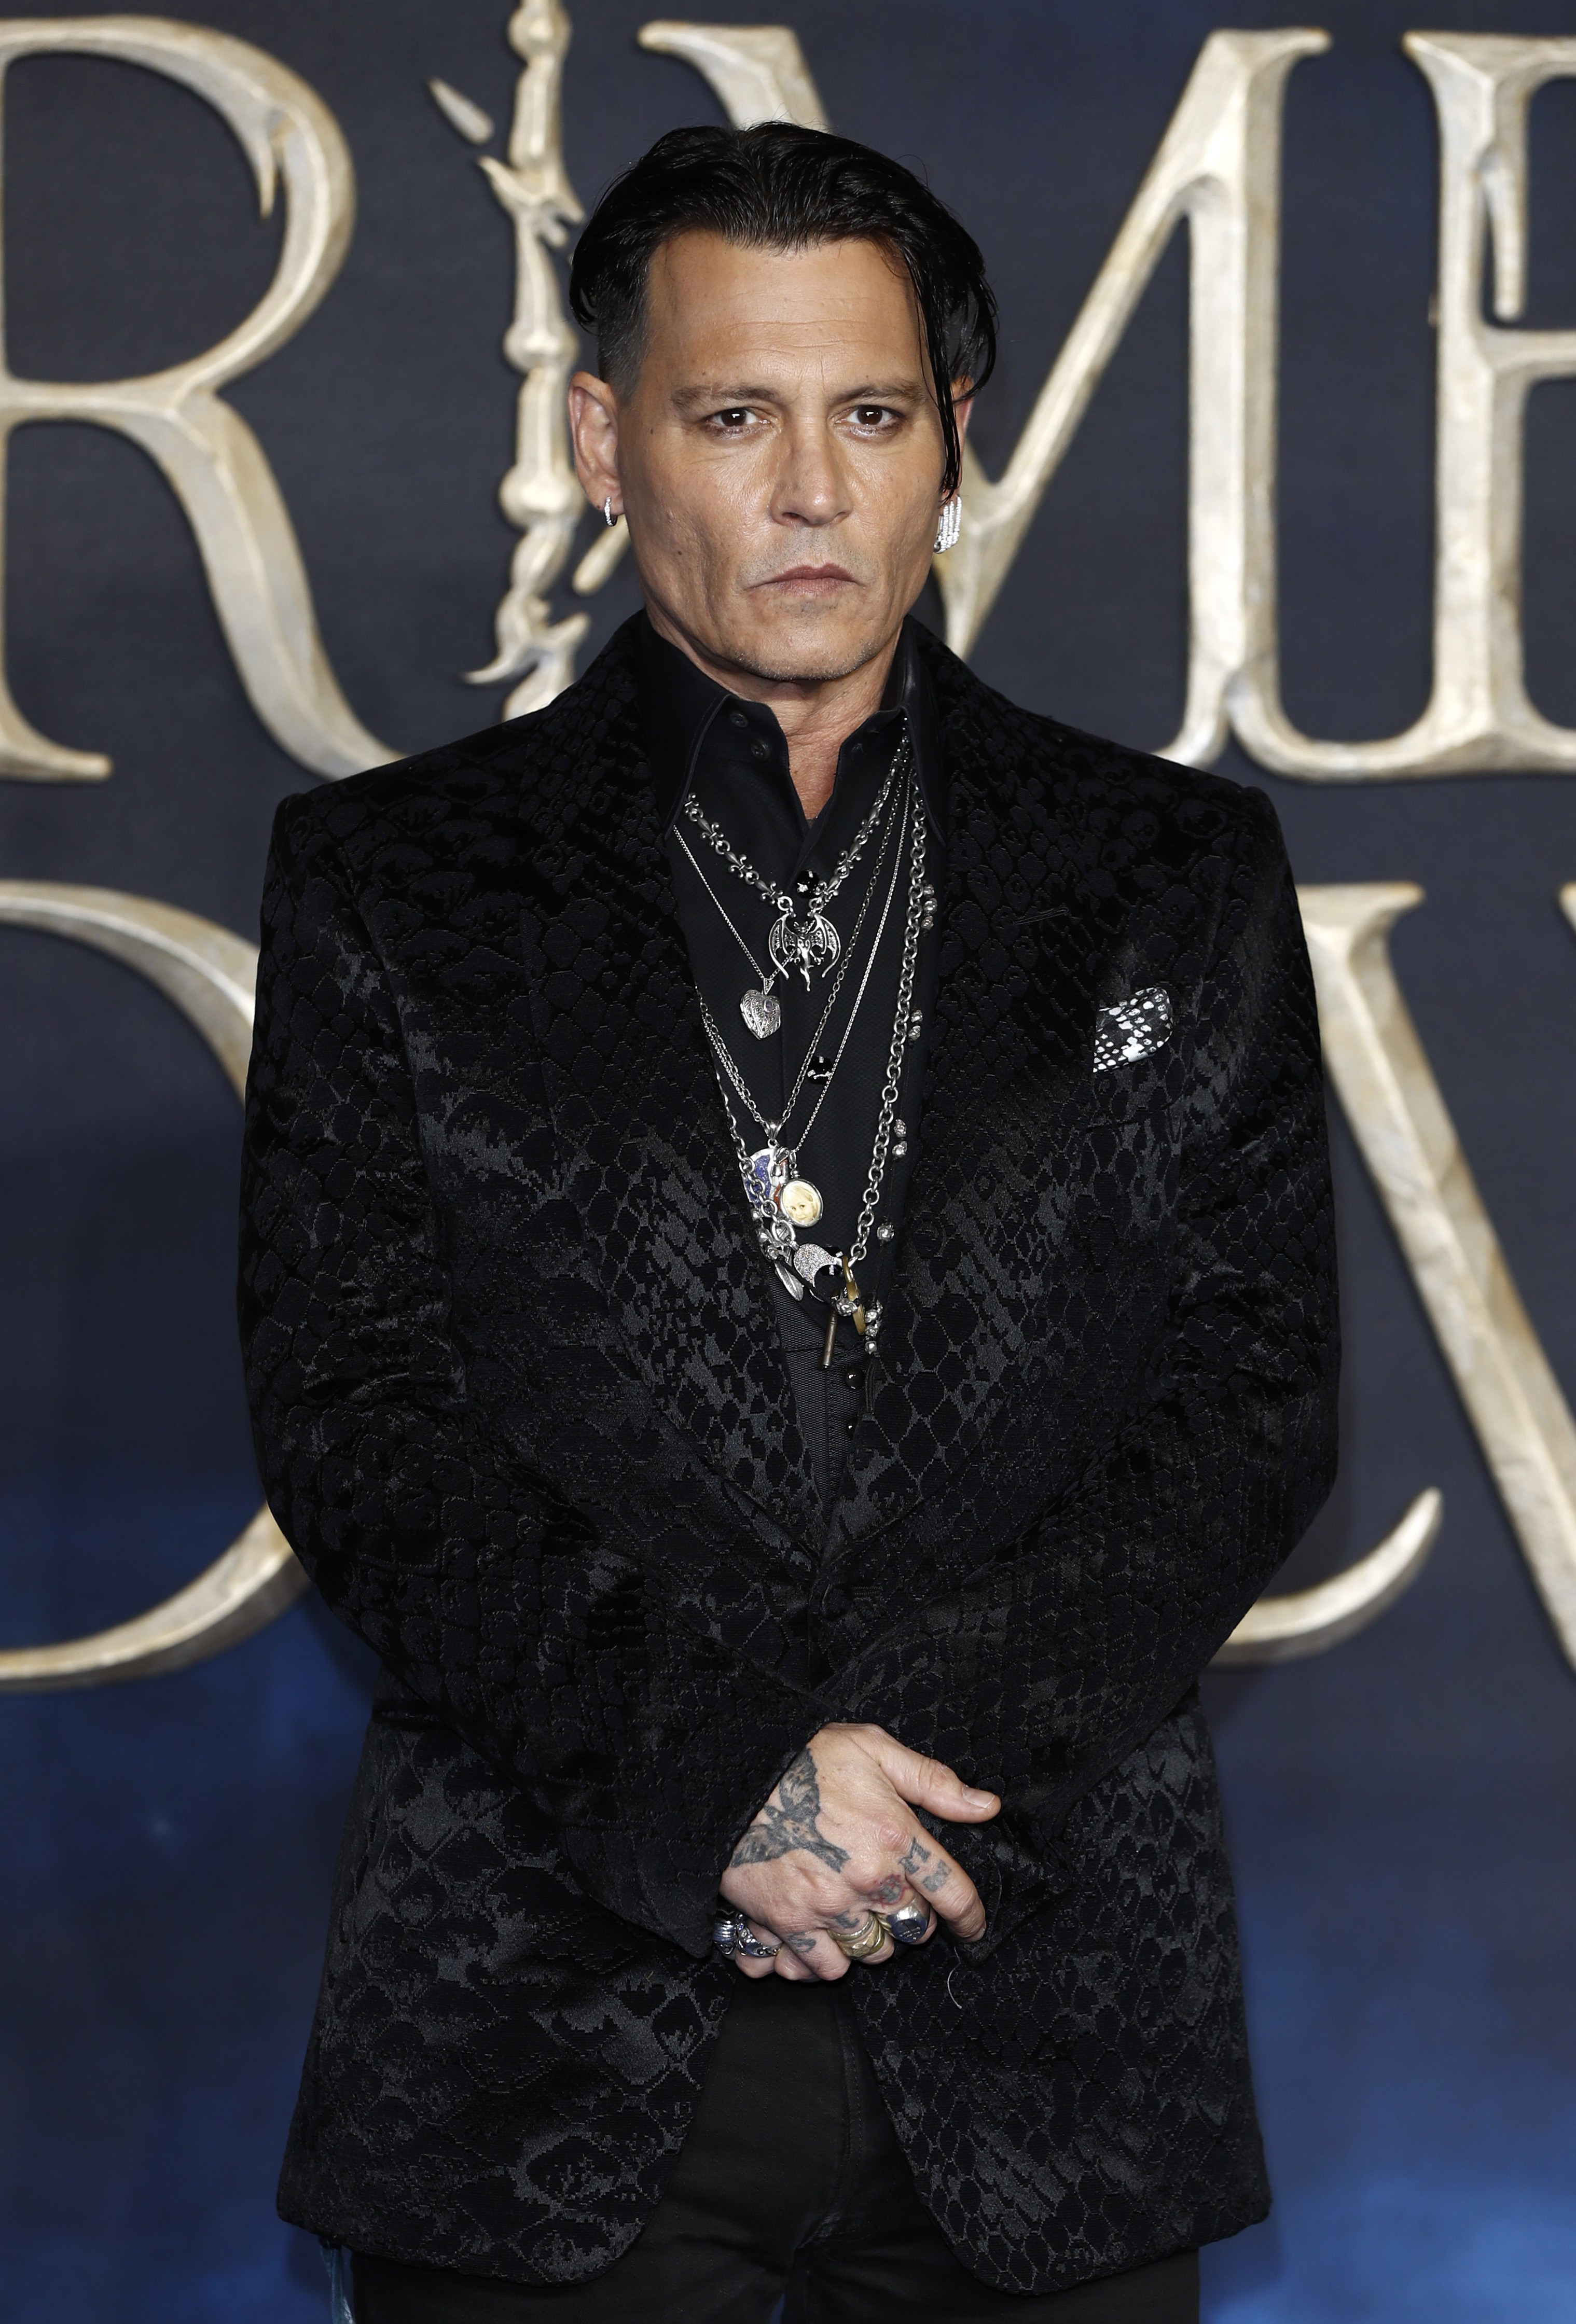 O ator Johnny Depp (Foto: Getty Images)